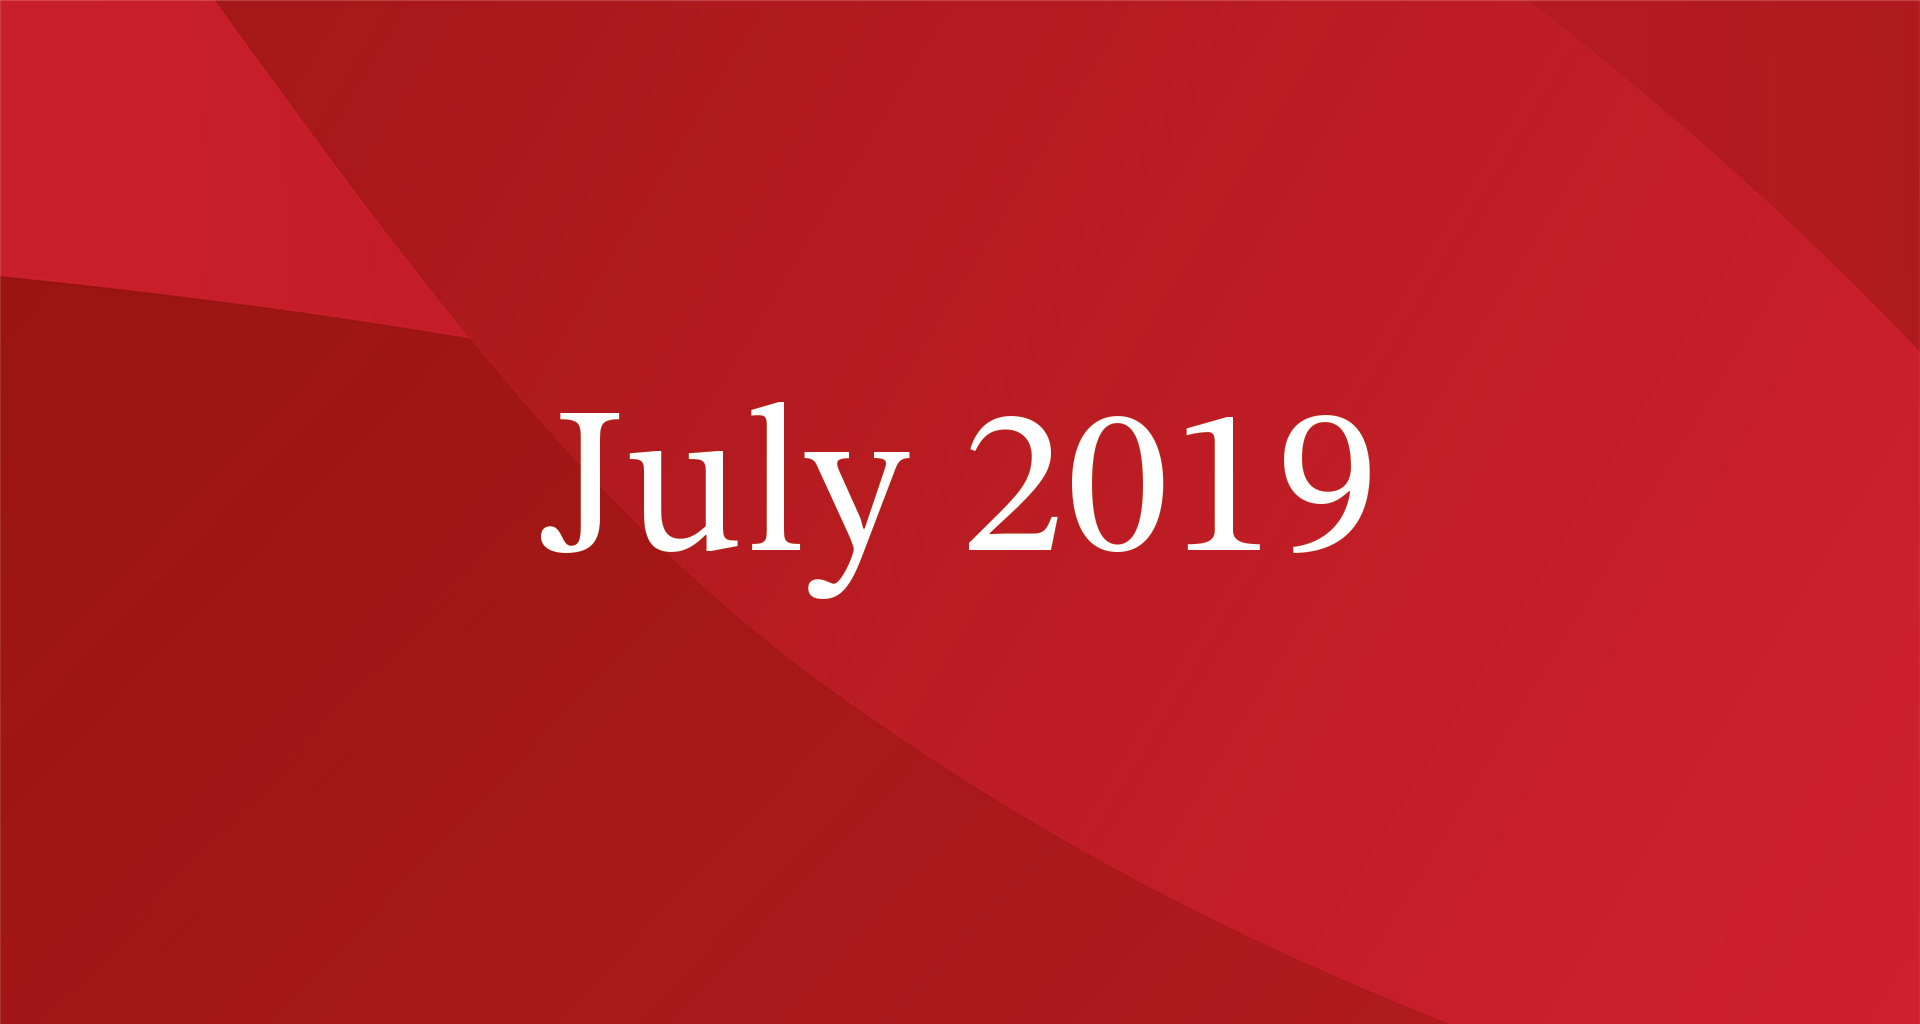 July 2019 President's Blog Image